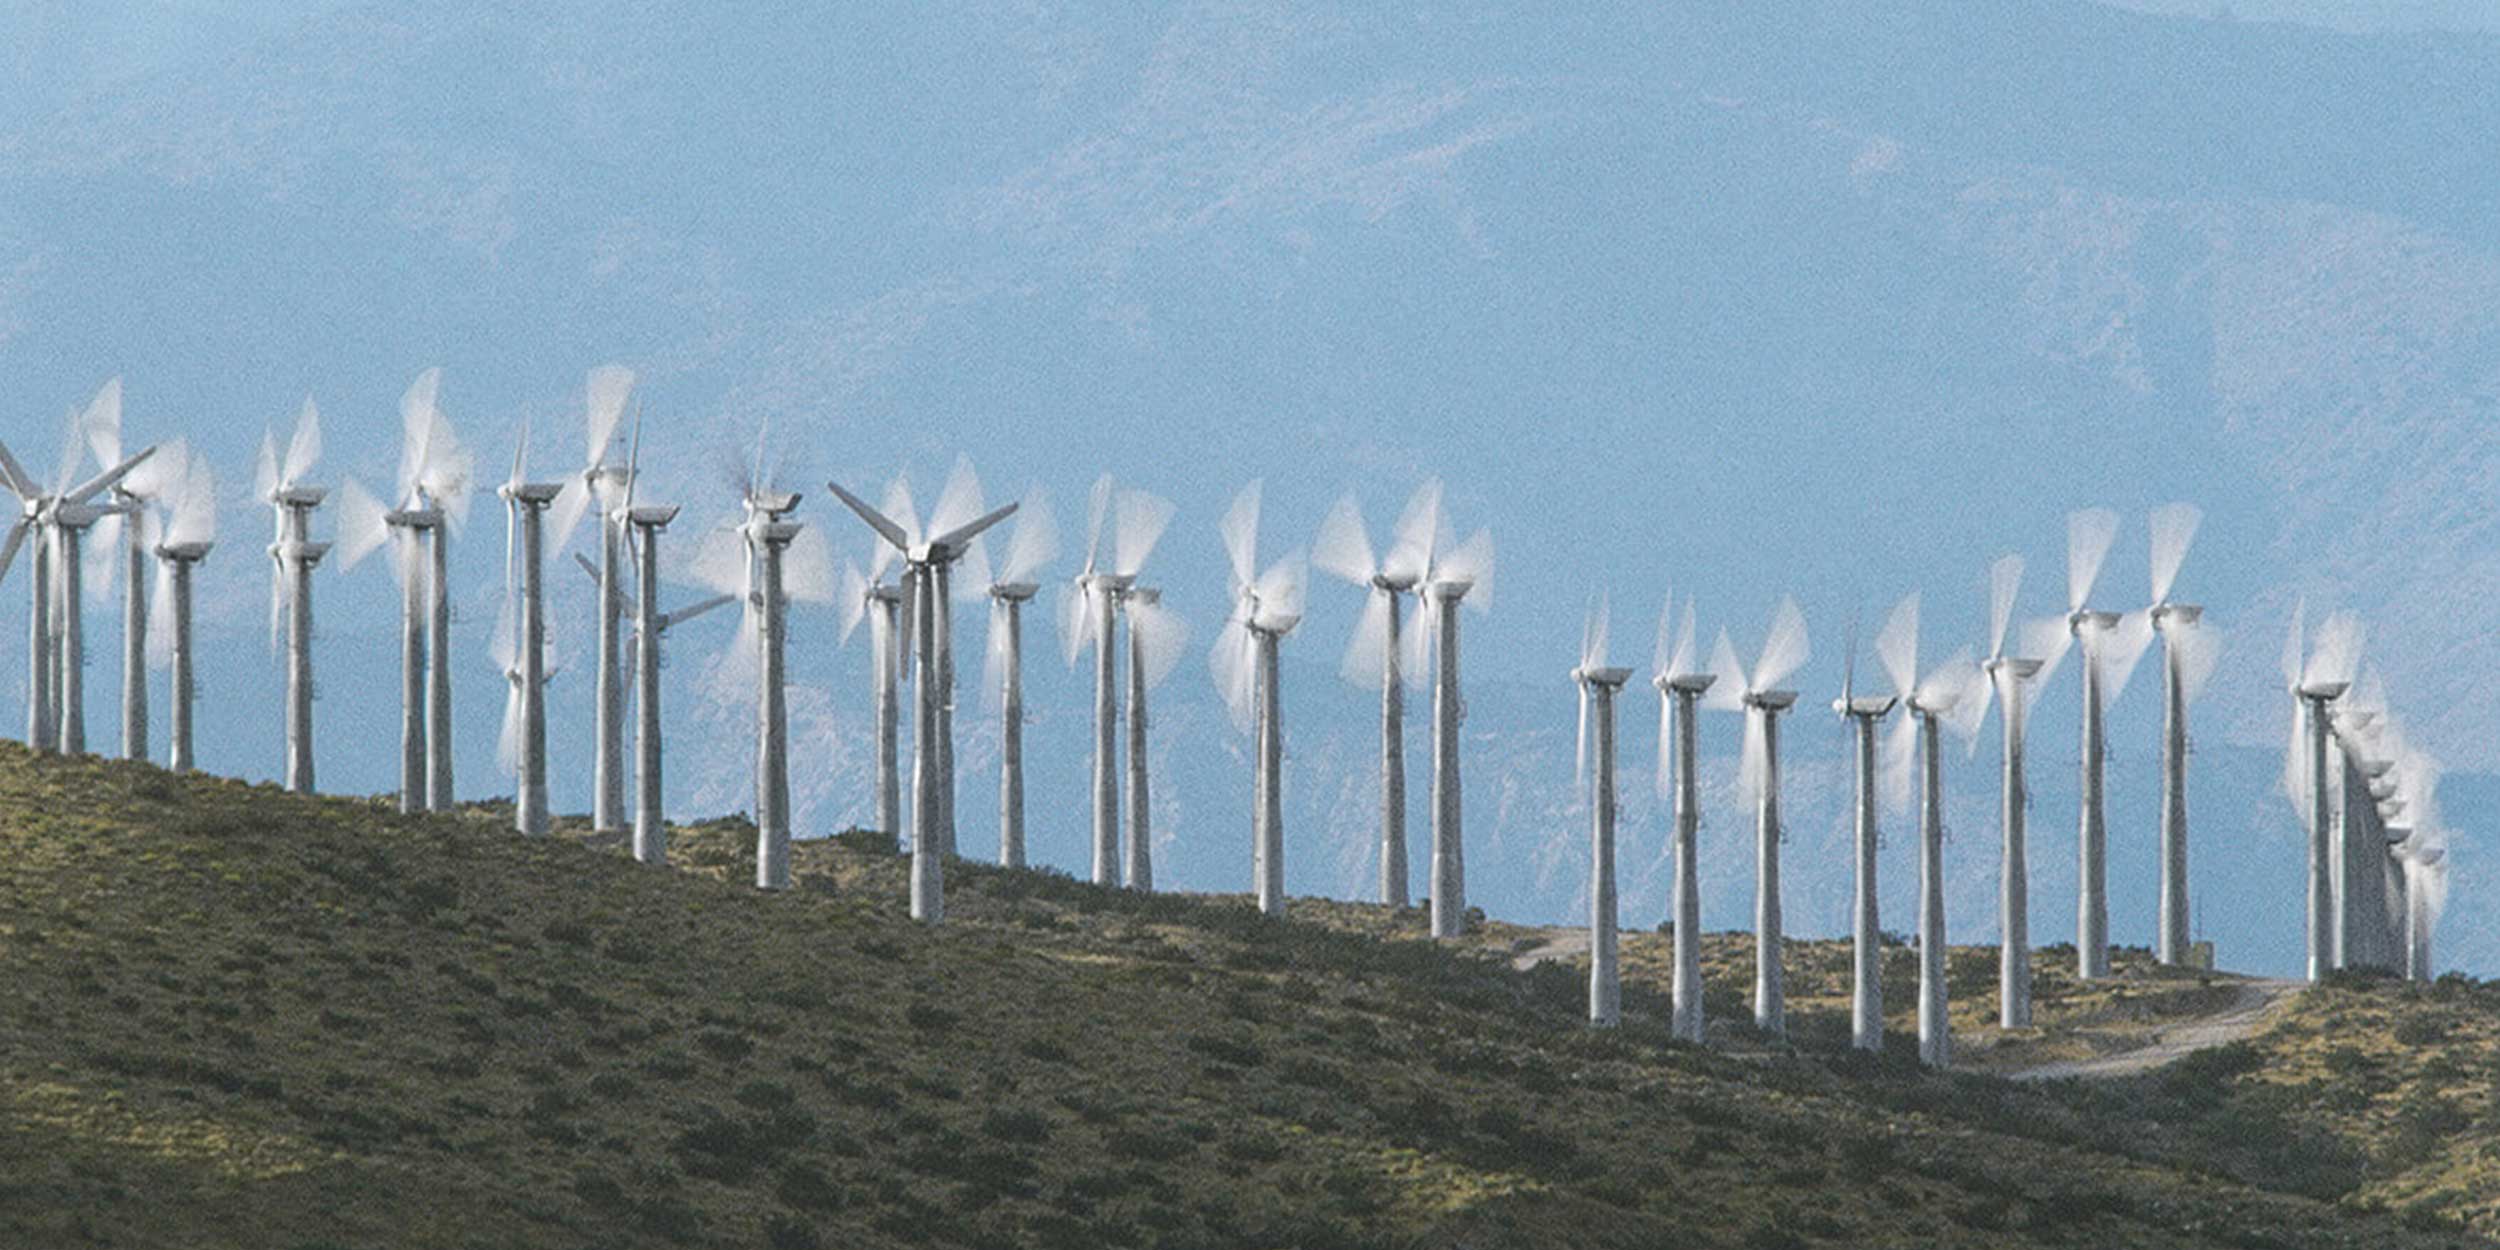 Image of wind power plants